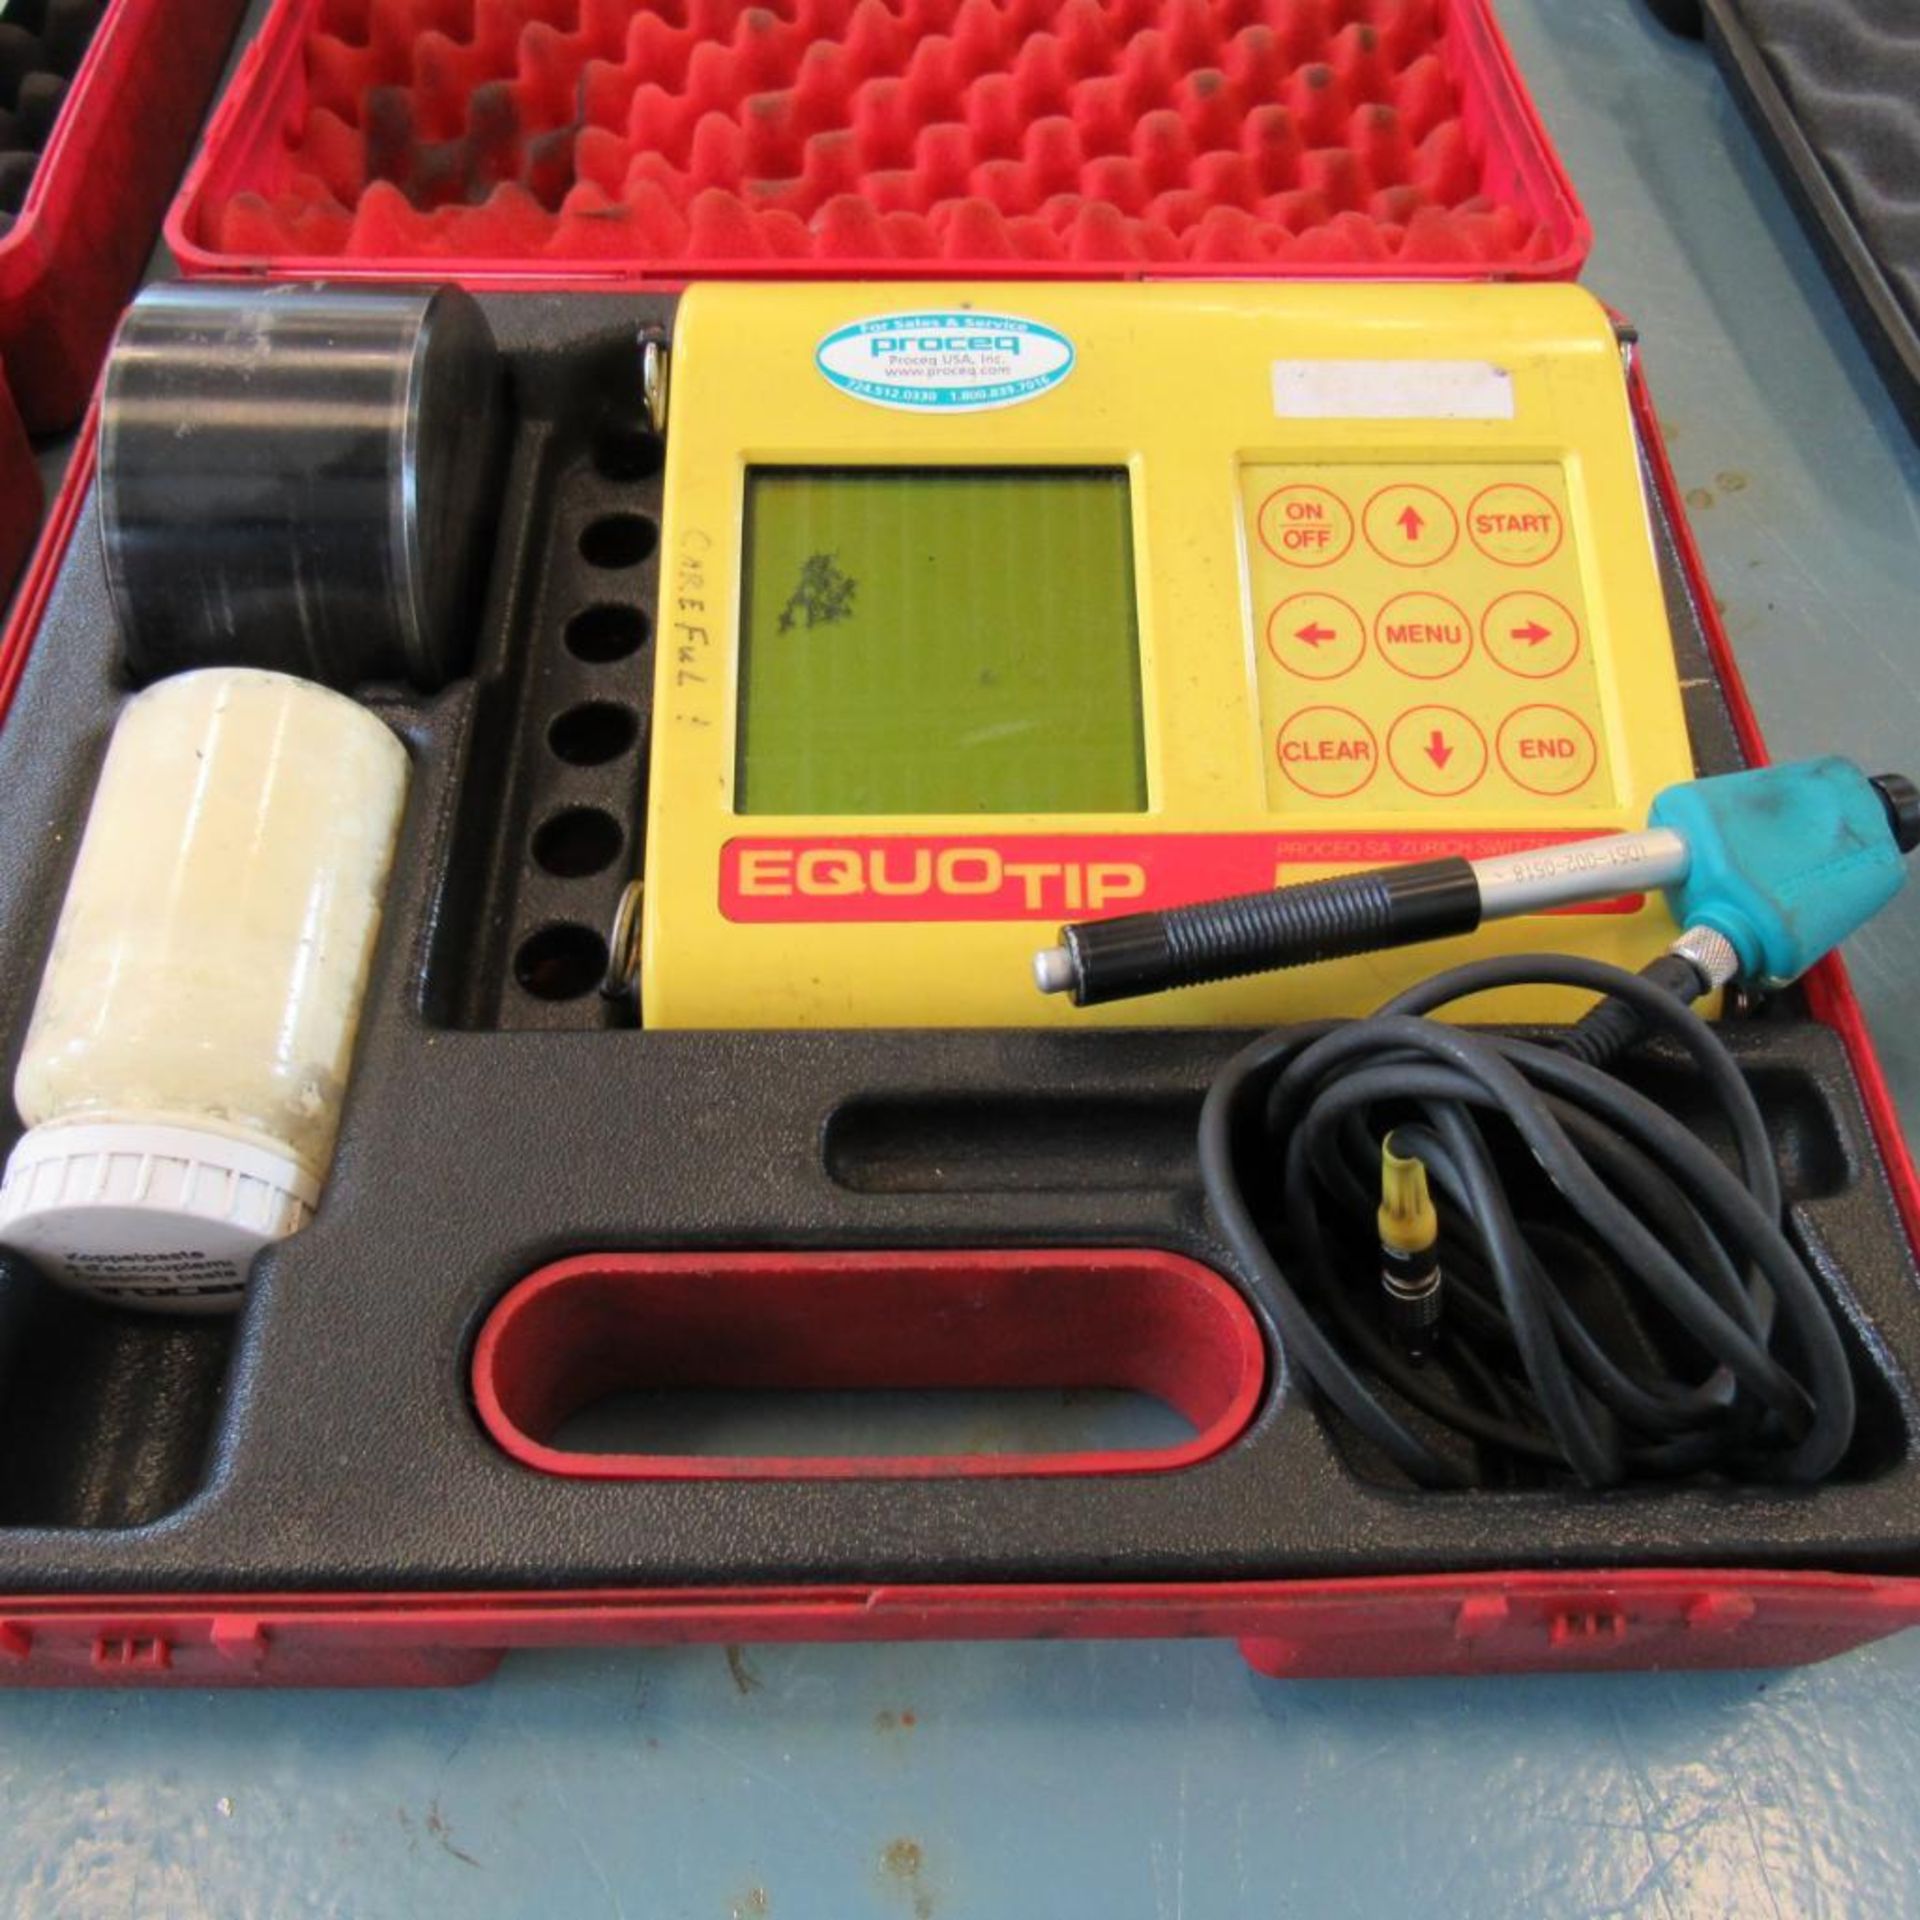 Proceq Instruments Equotip Portable Hardness Tester (Location: Bldg. 3)